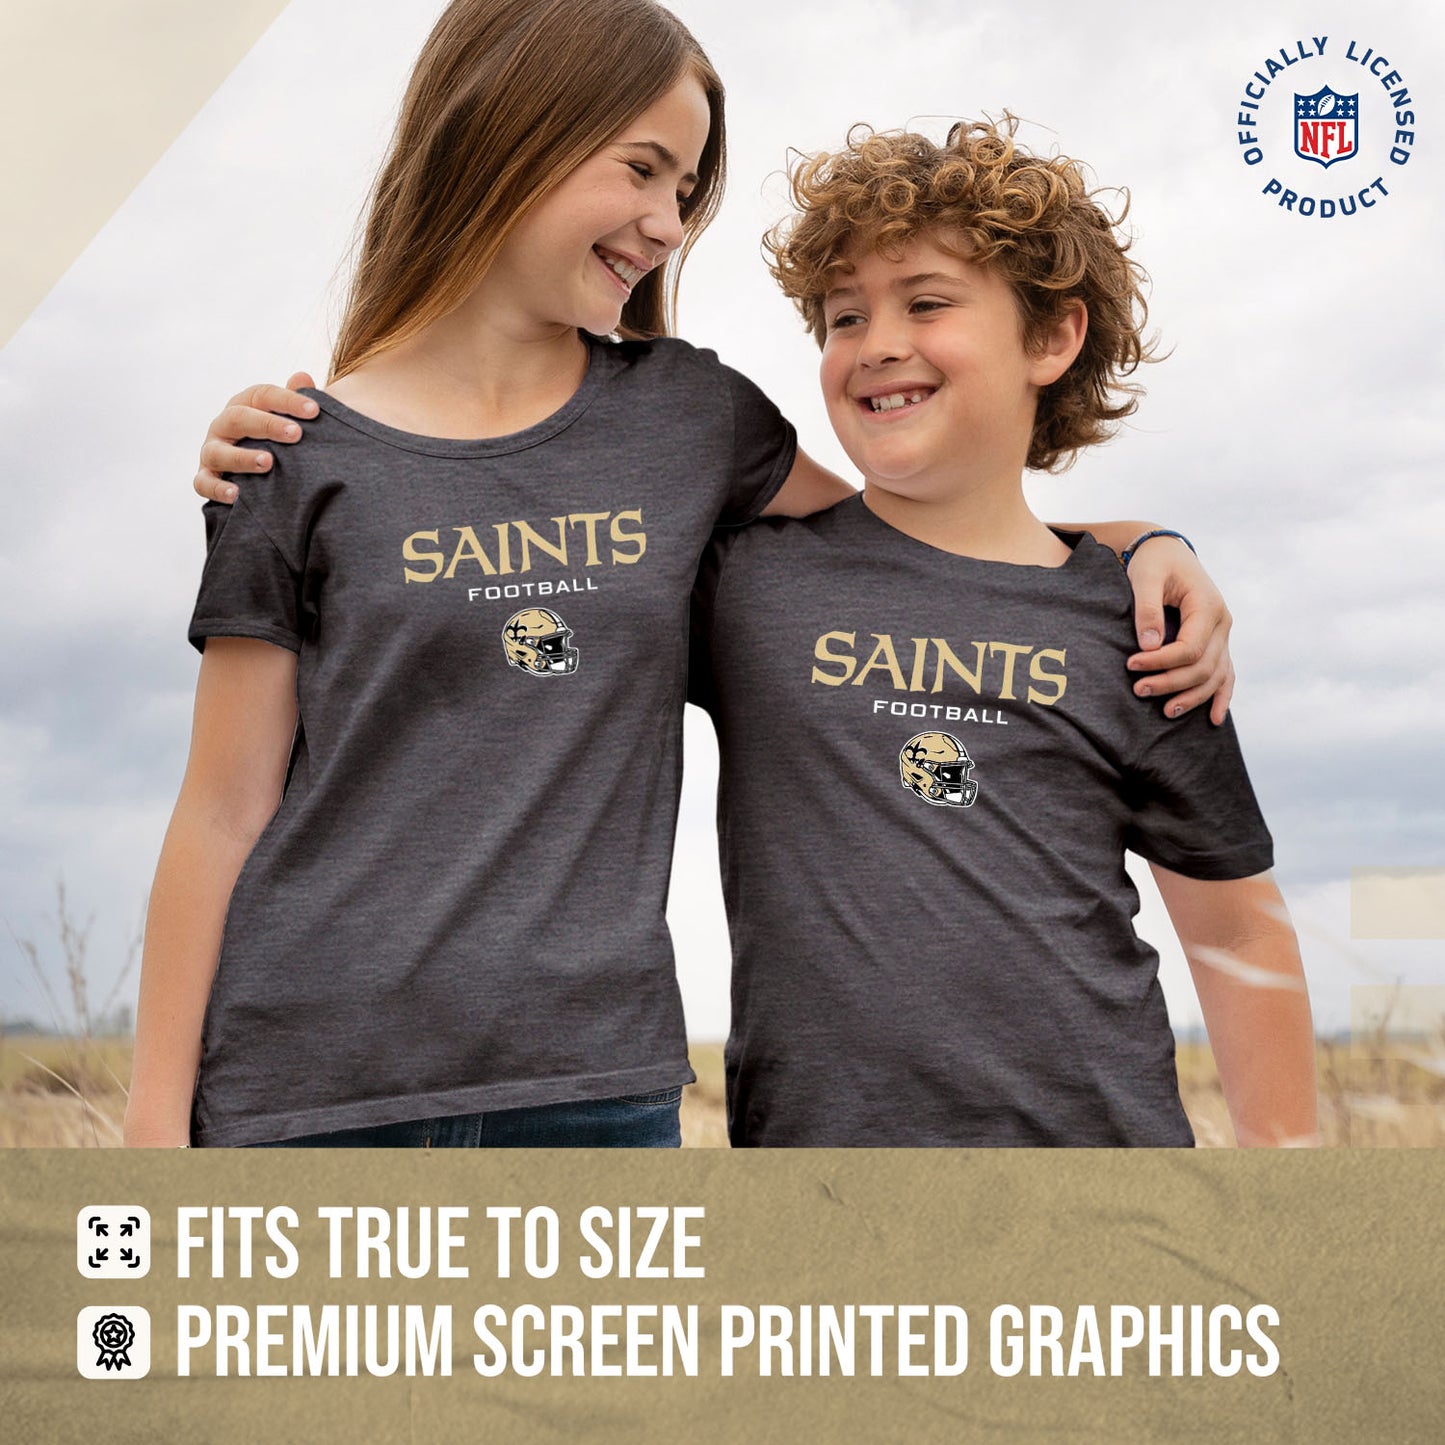 New Orleans Saints NFL Youth Football Helmet Tagless T-Shirt - Charcoal